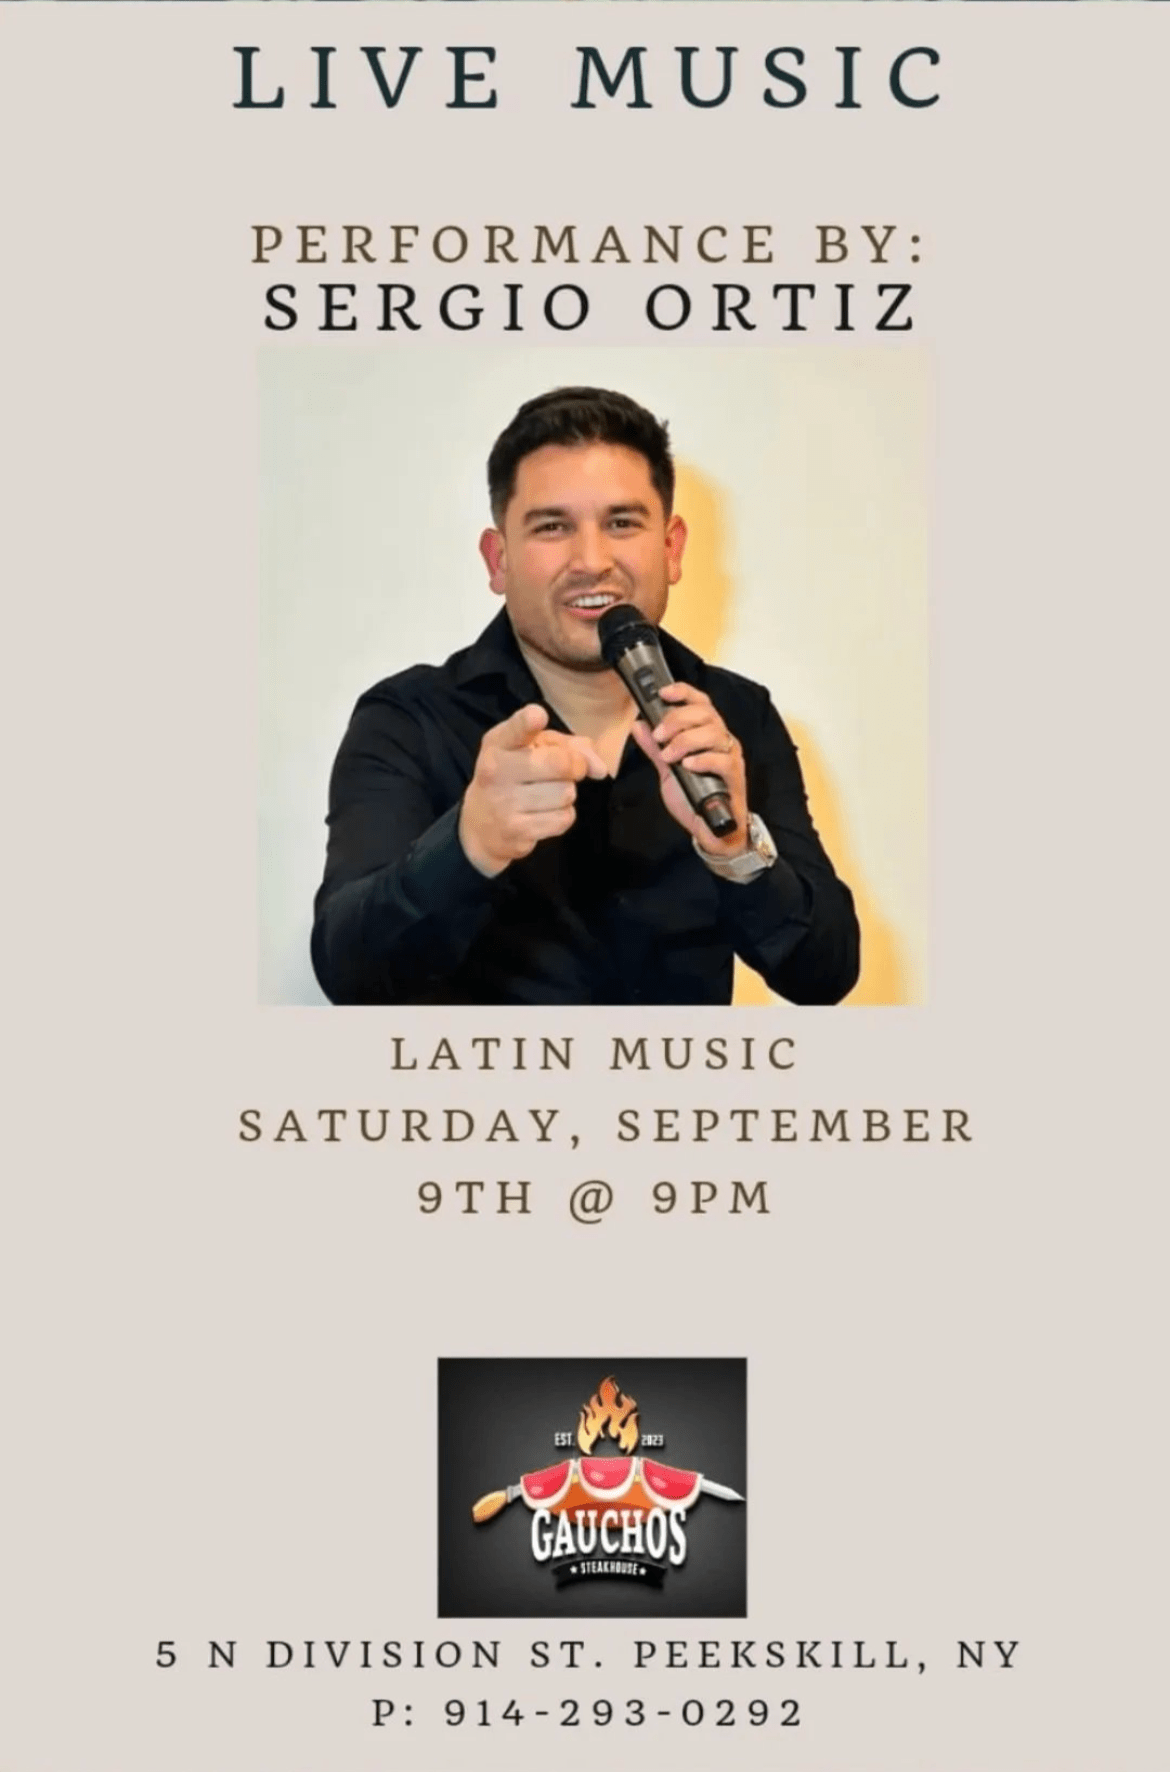 Flier for Sergio Ortiz at Gaucho's Steakhouse